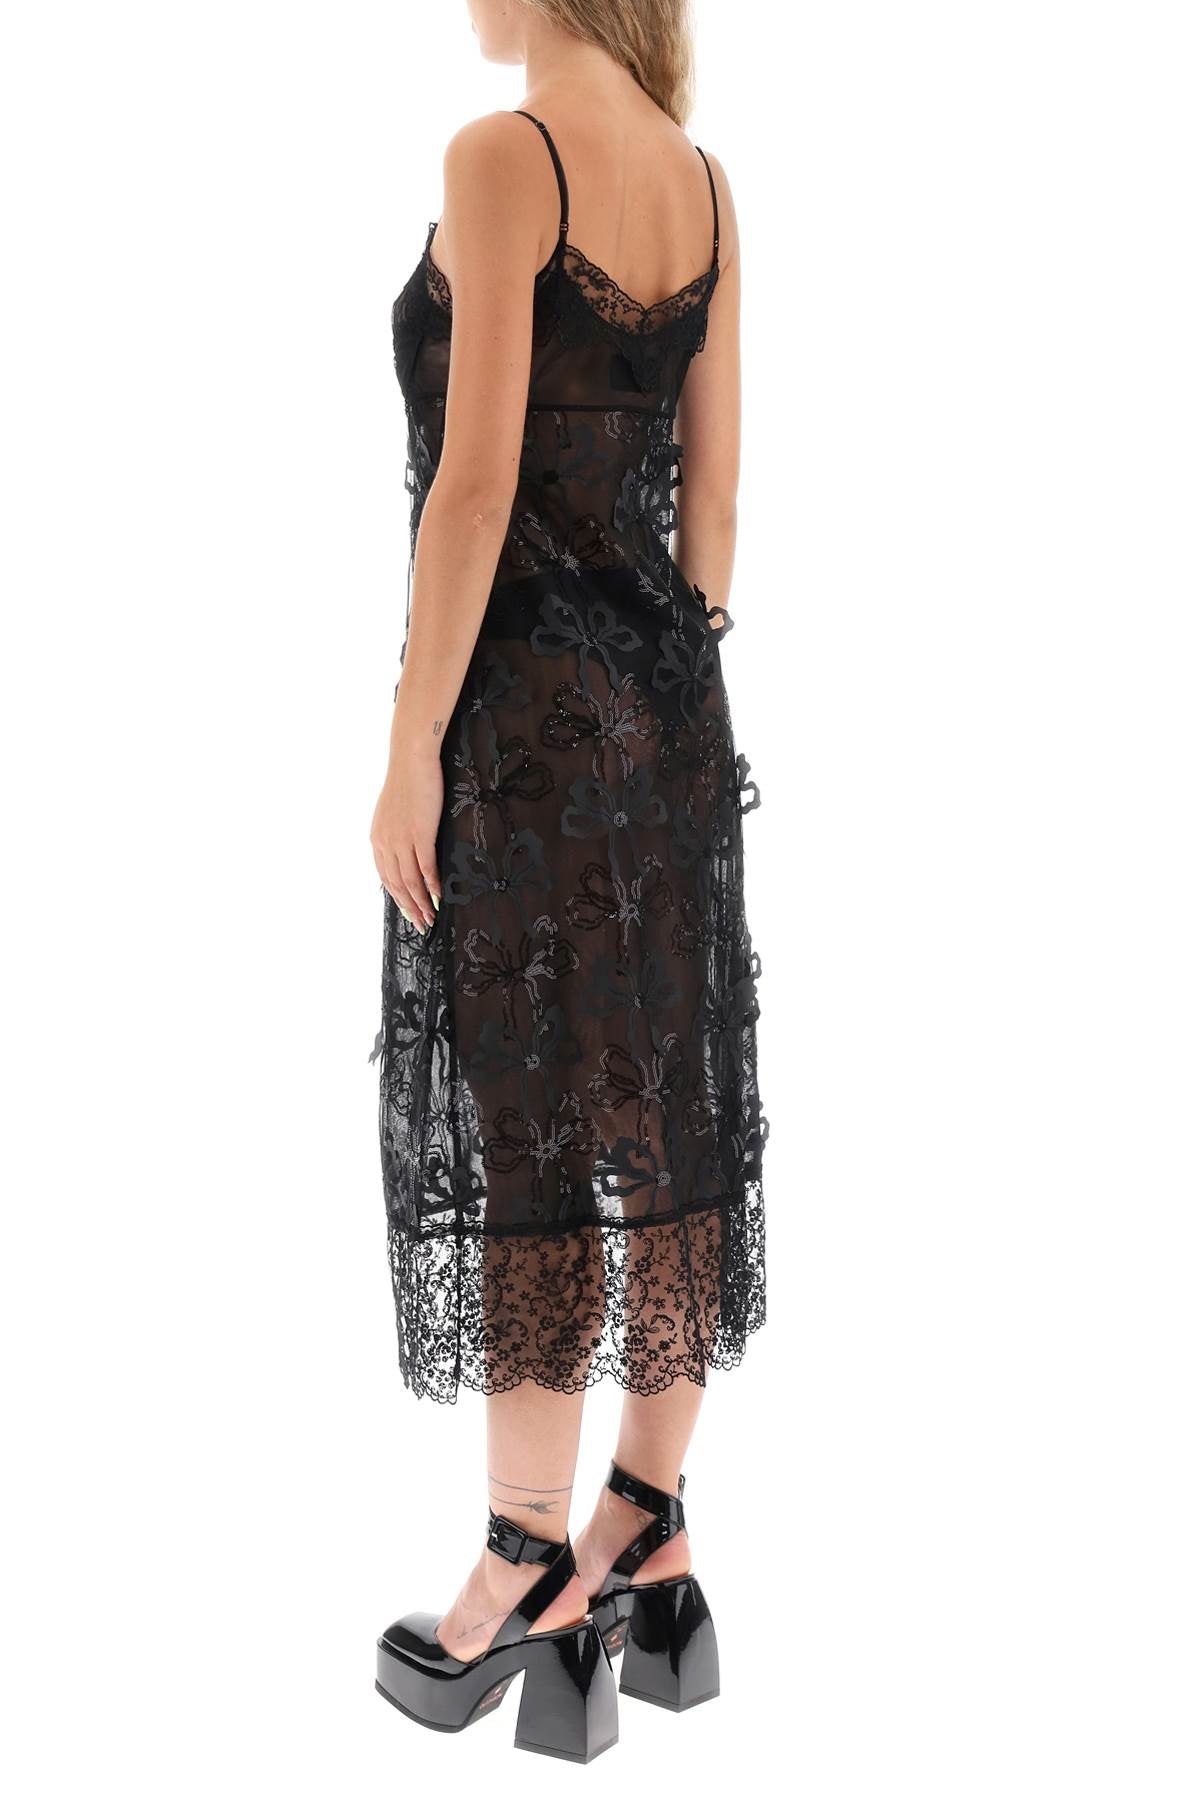 Romantic & Sensual Embroidered Tulle Slip Dress for Women